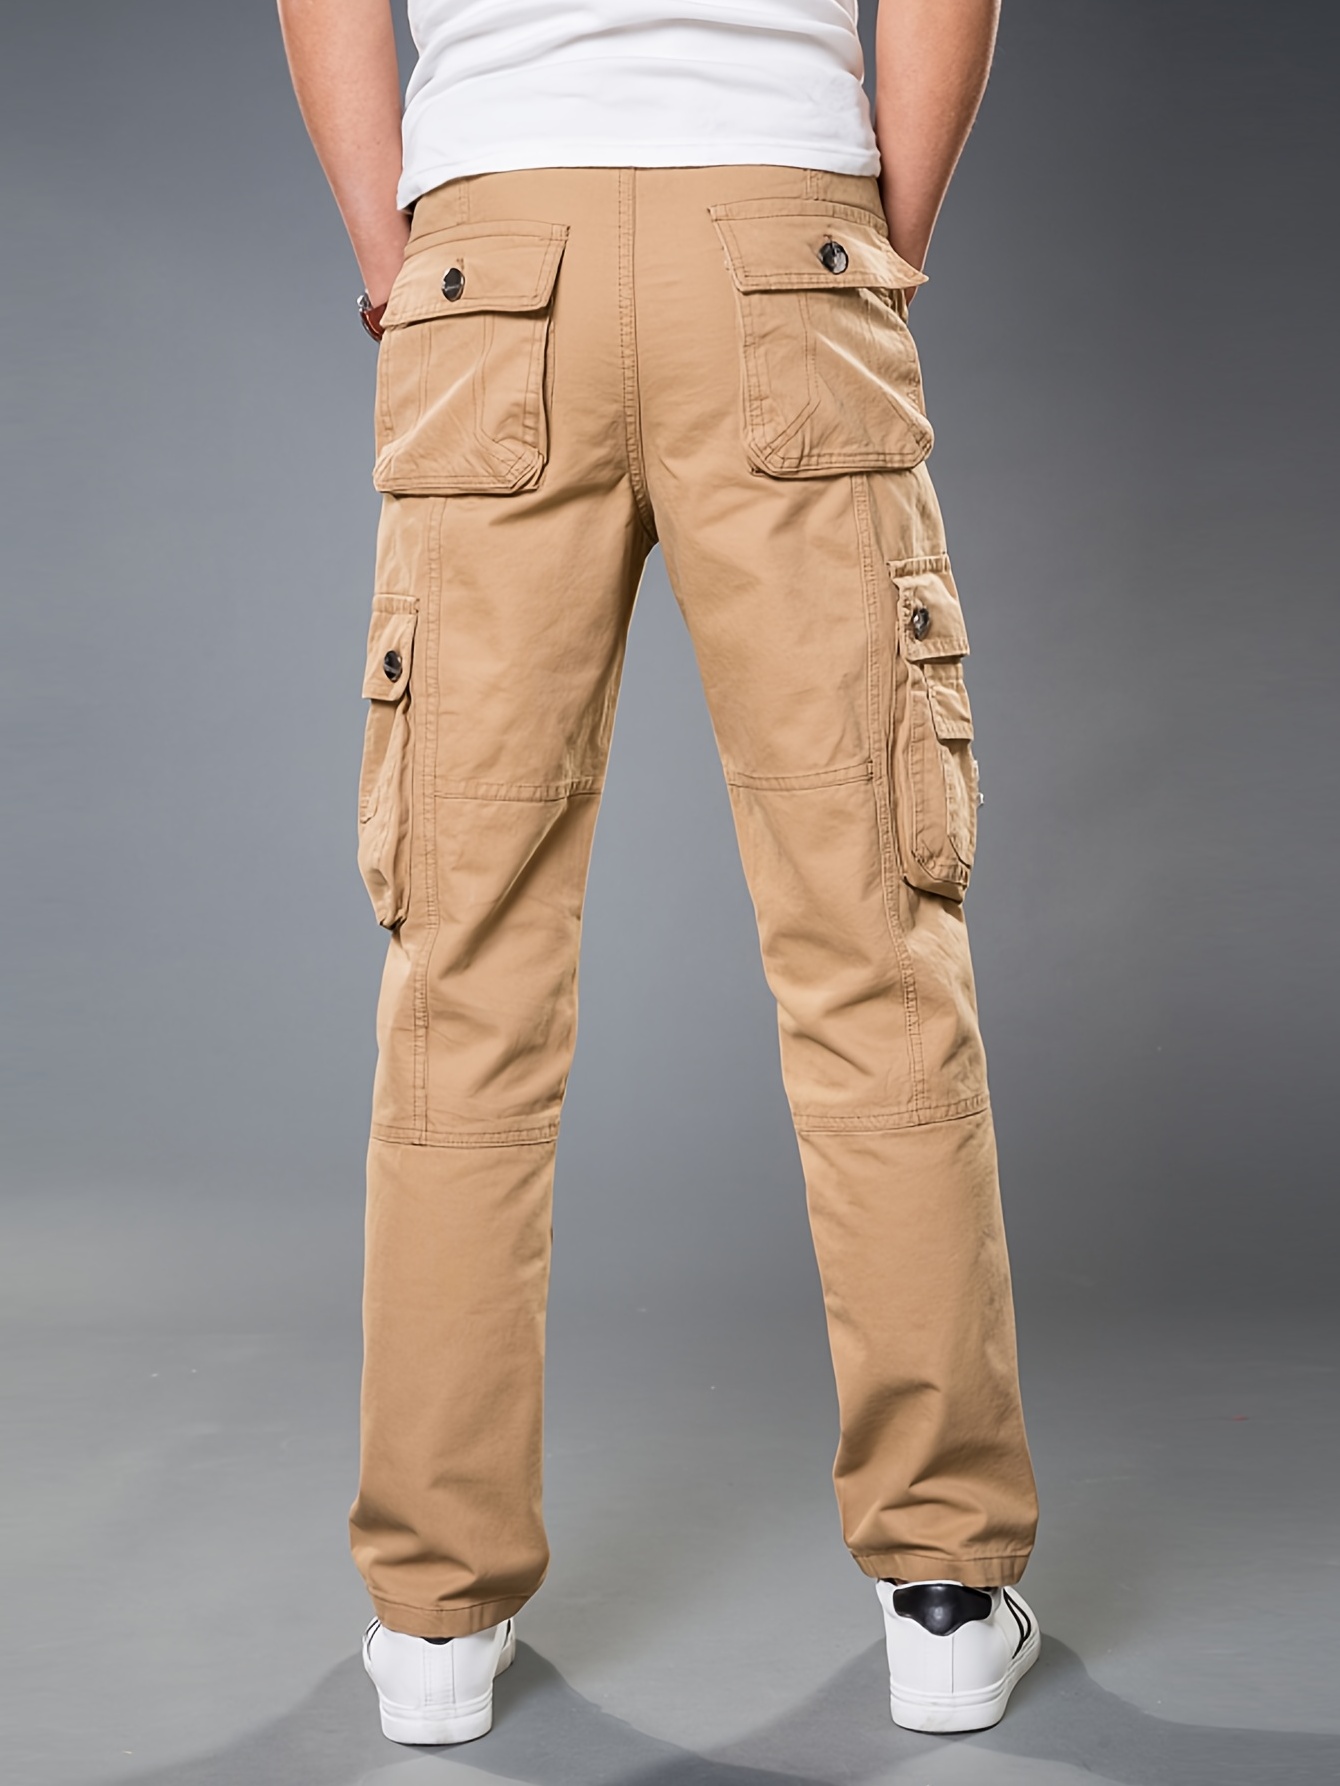 Pantalon Cargo Color Beige Para Hombre